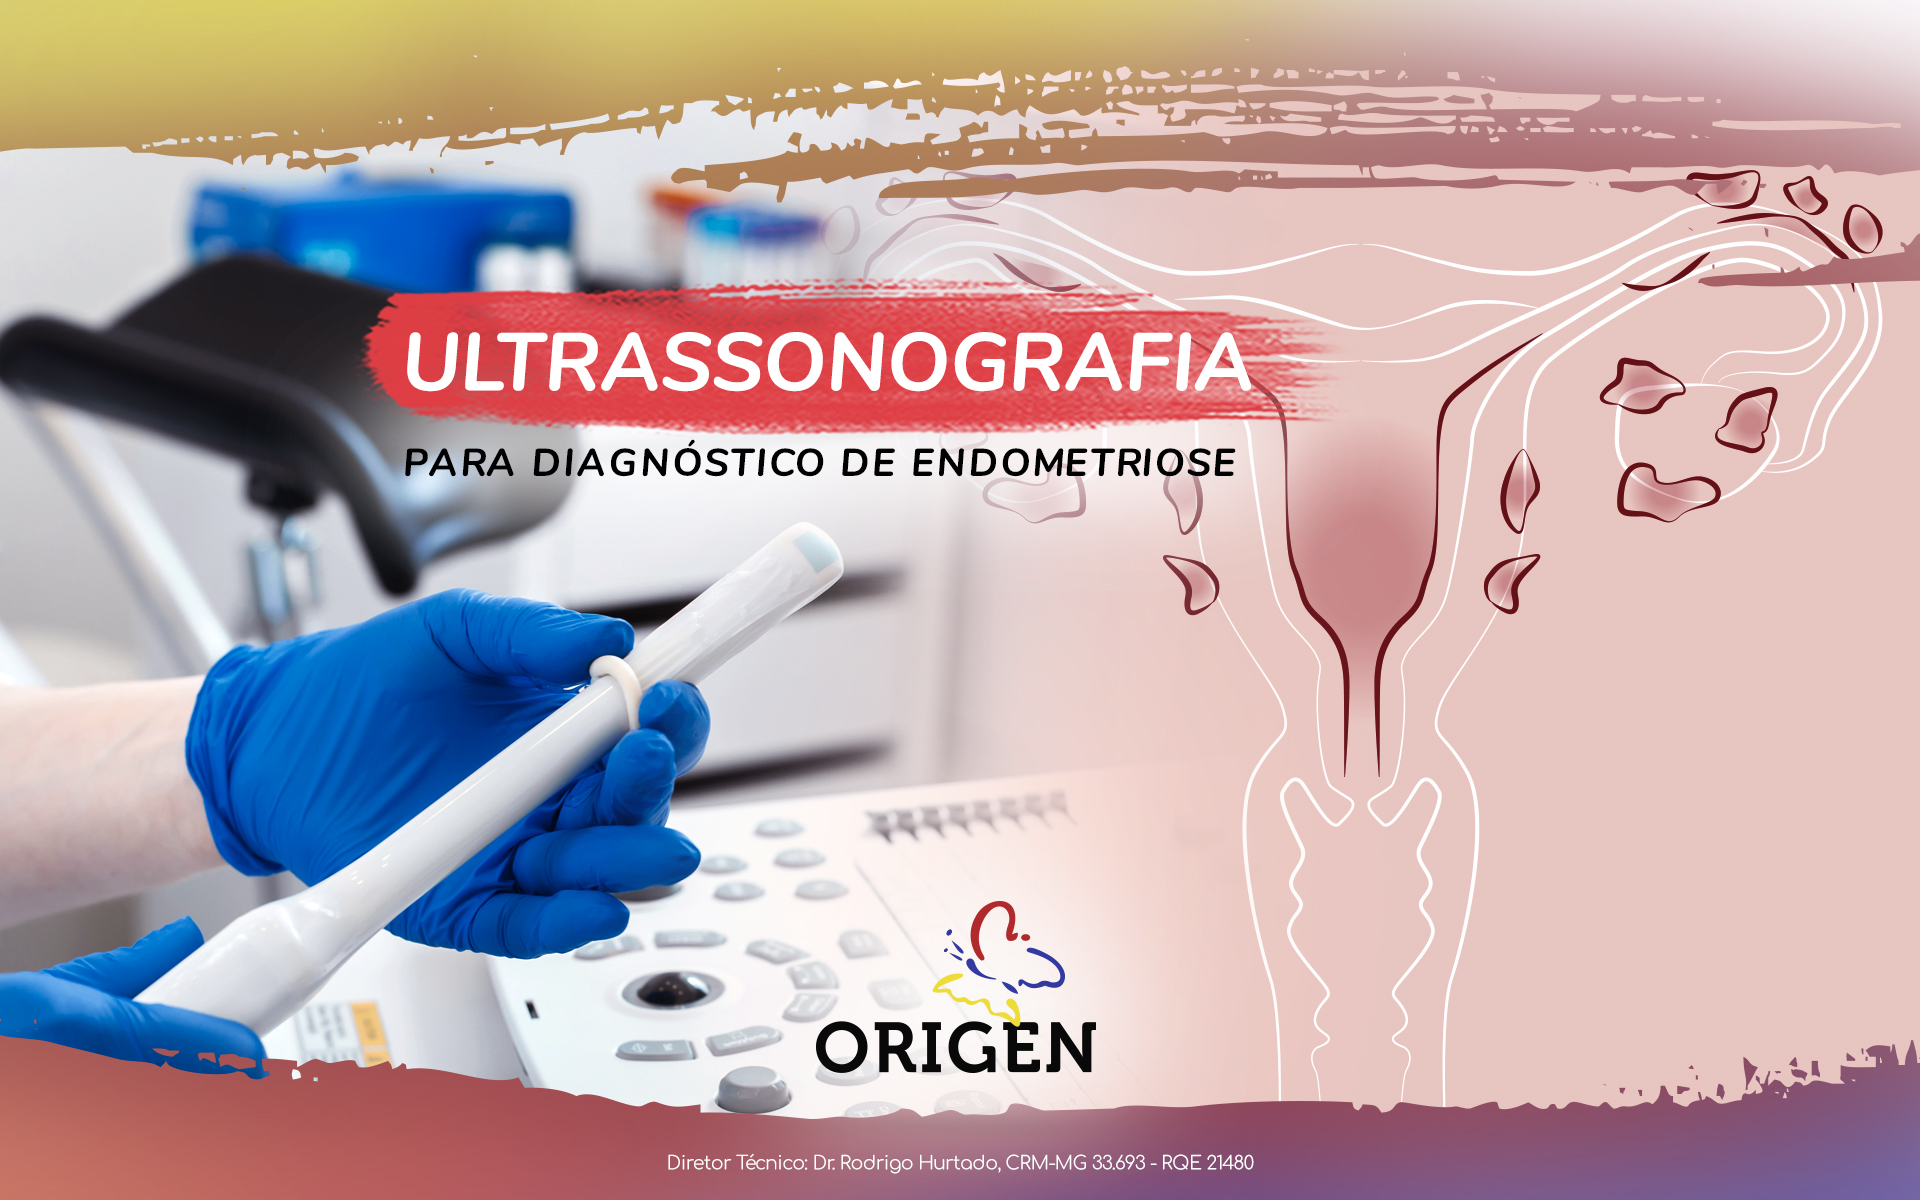 Ultrassonografia para diagnóstico de endometriose